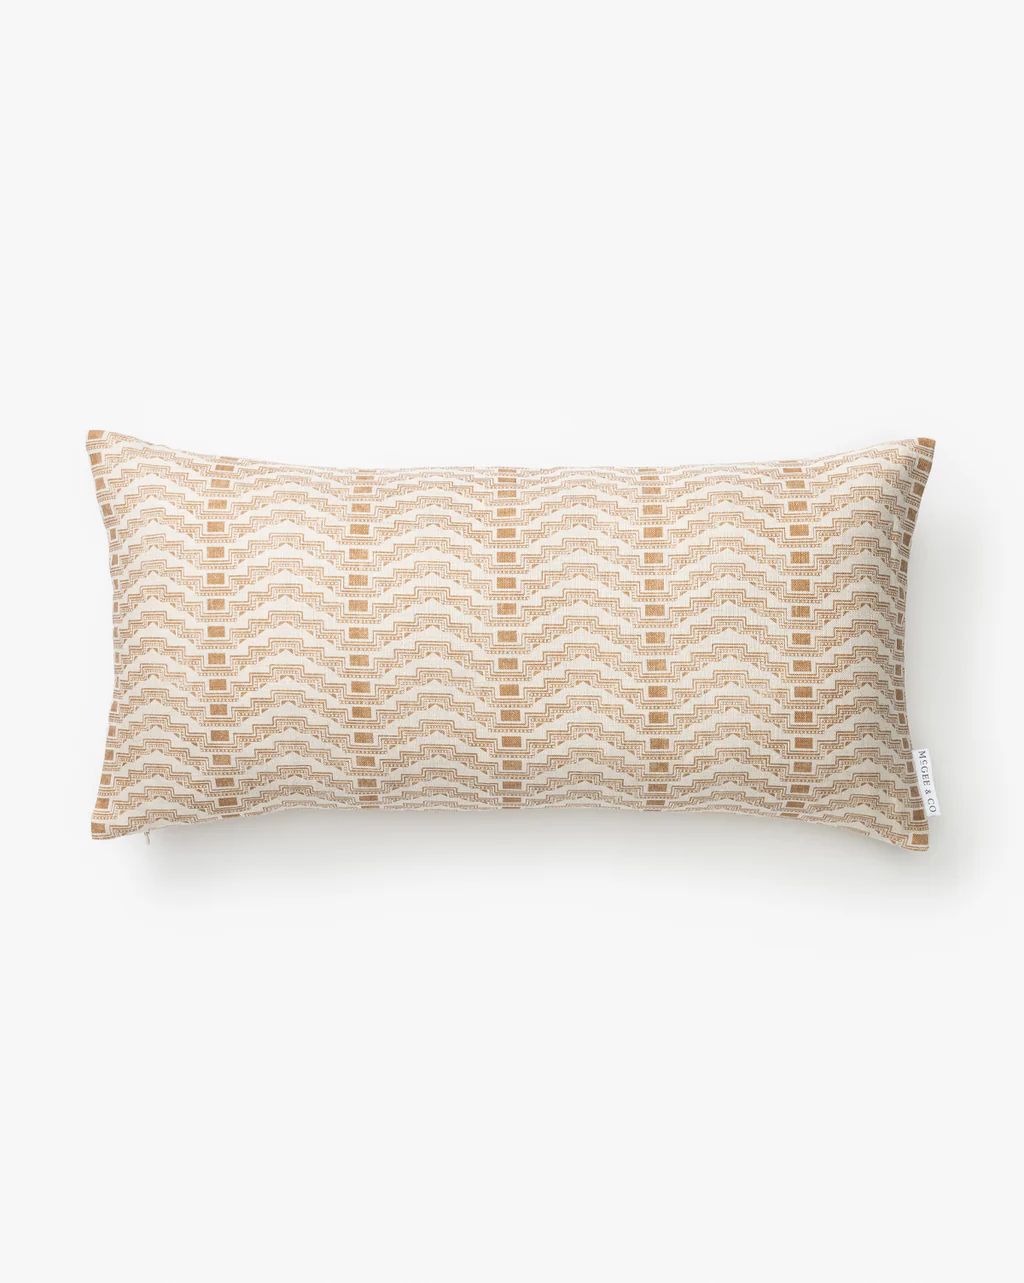 Hejira Pillow Cover | McGee & Co.